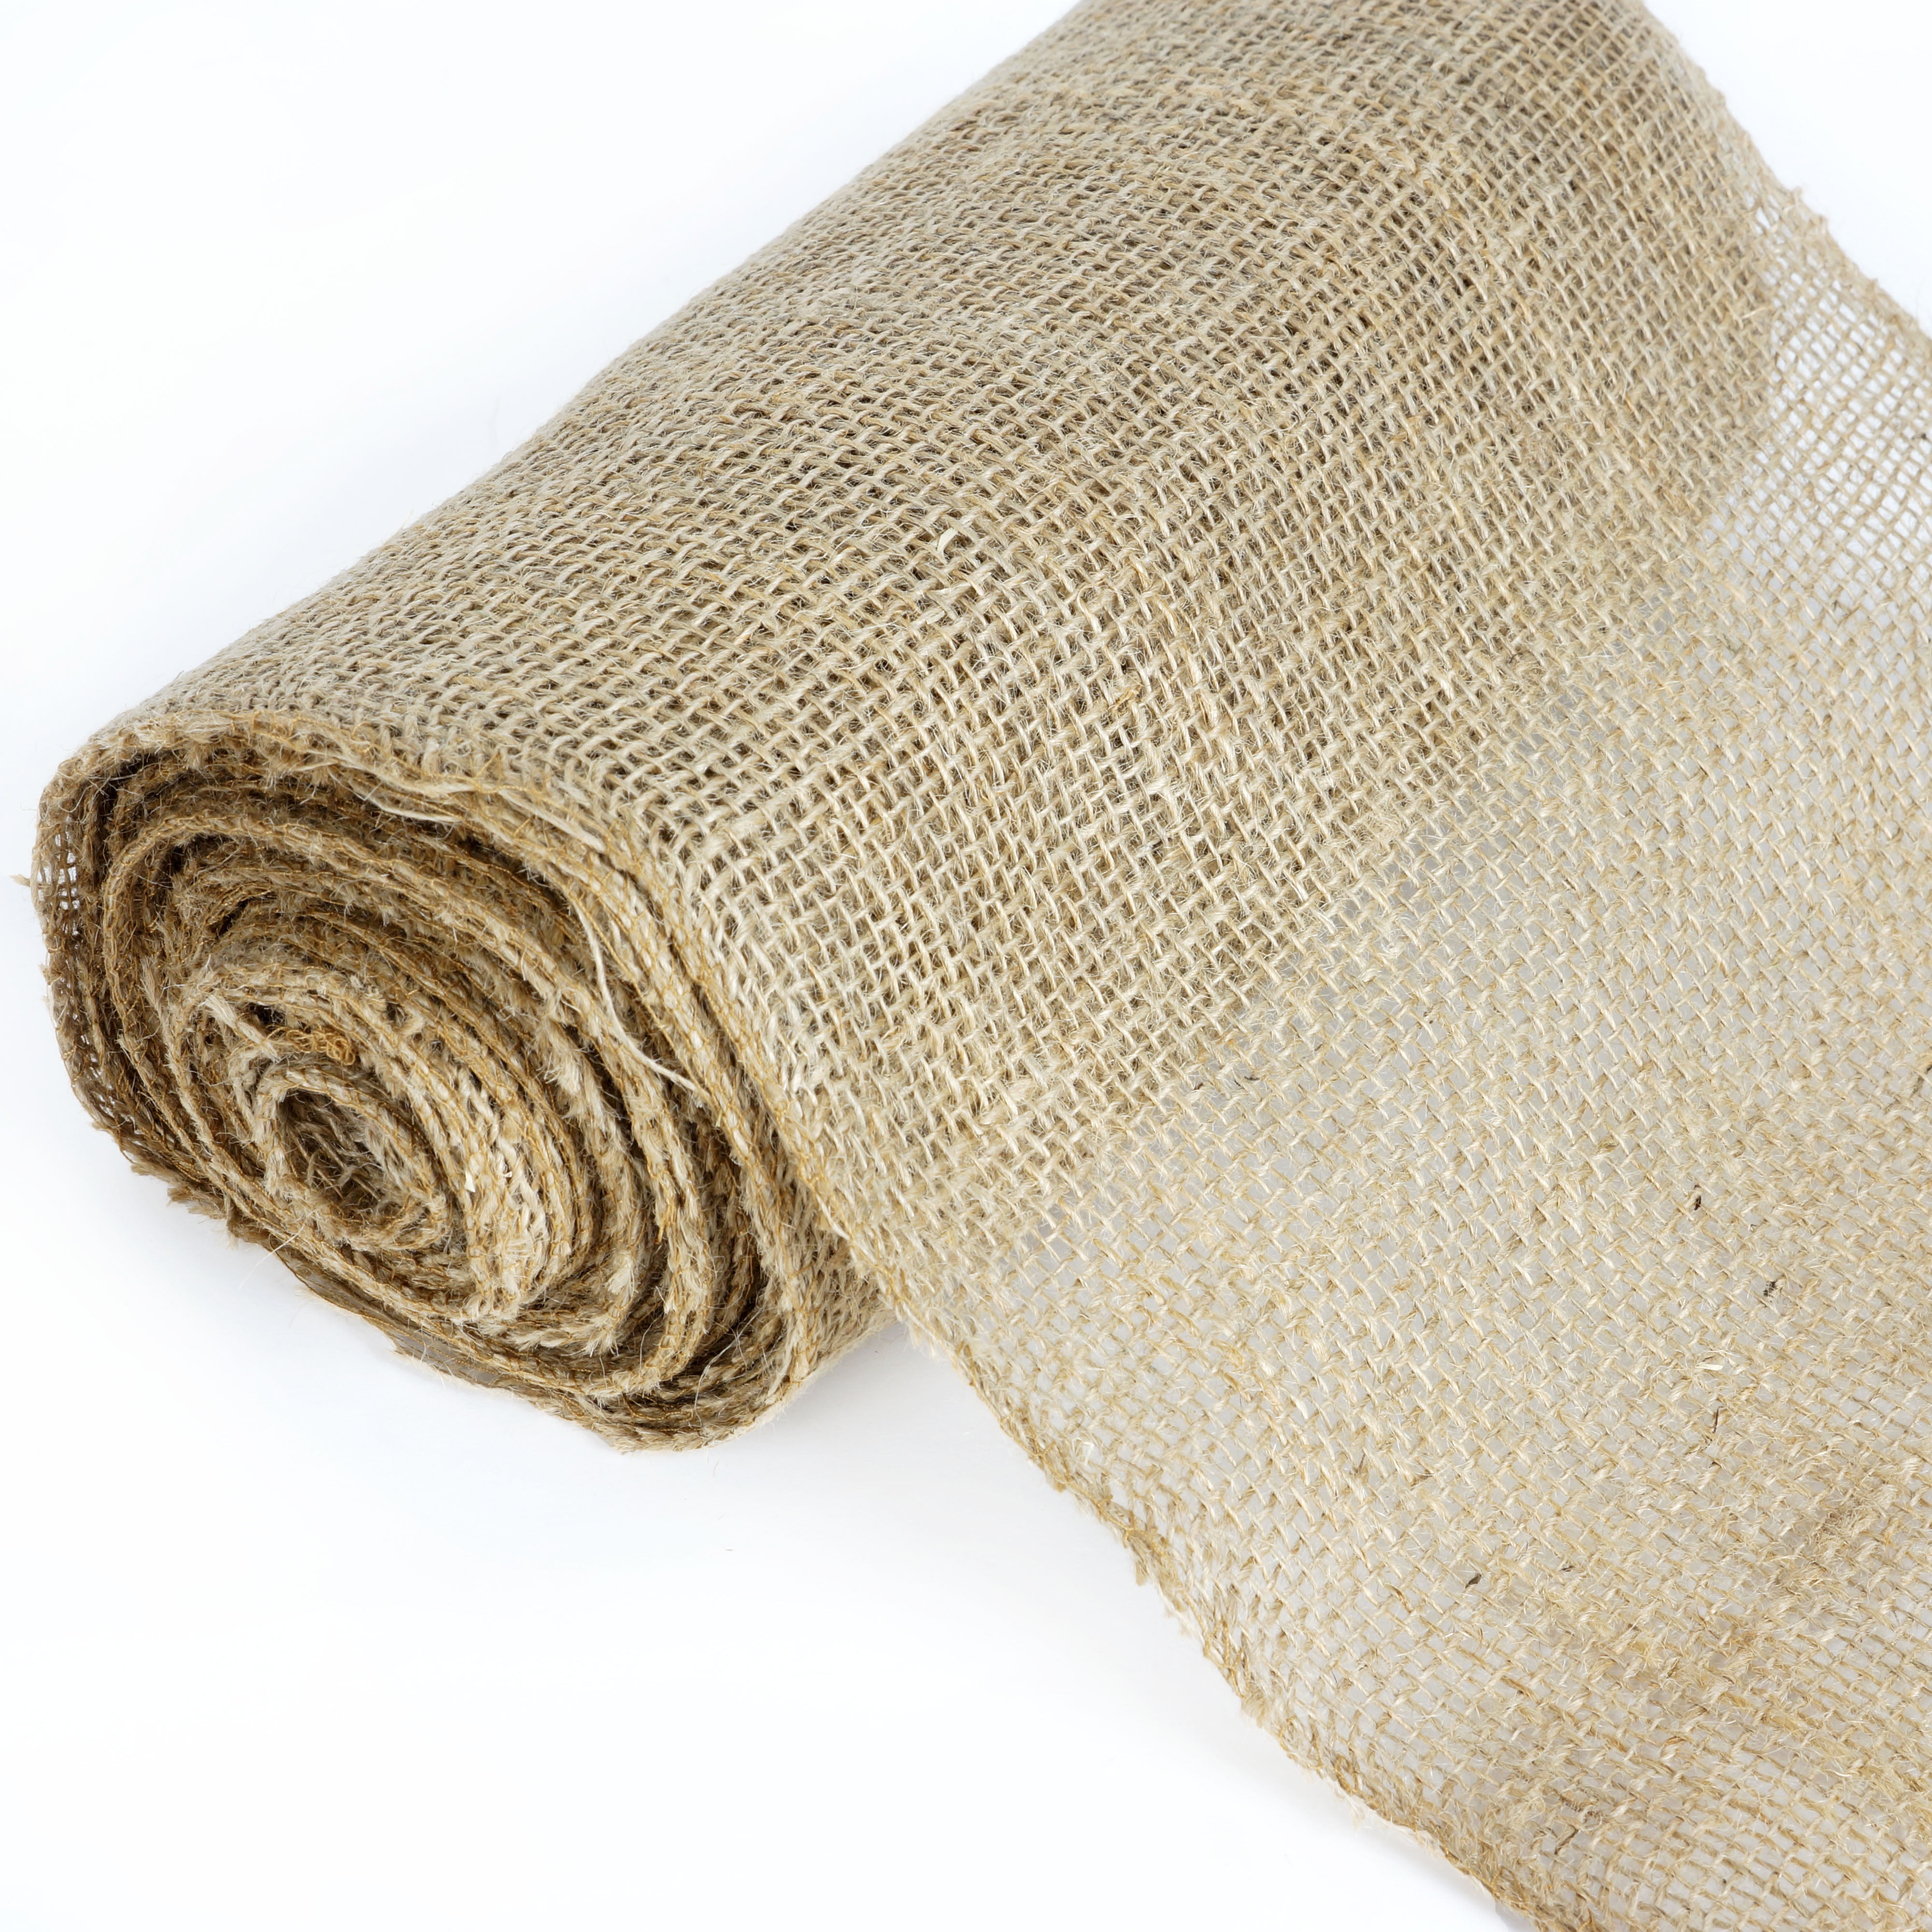 BalsaCircle Natural Brown 12 x 10 yards Burlap Fabric Roll Sewing